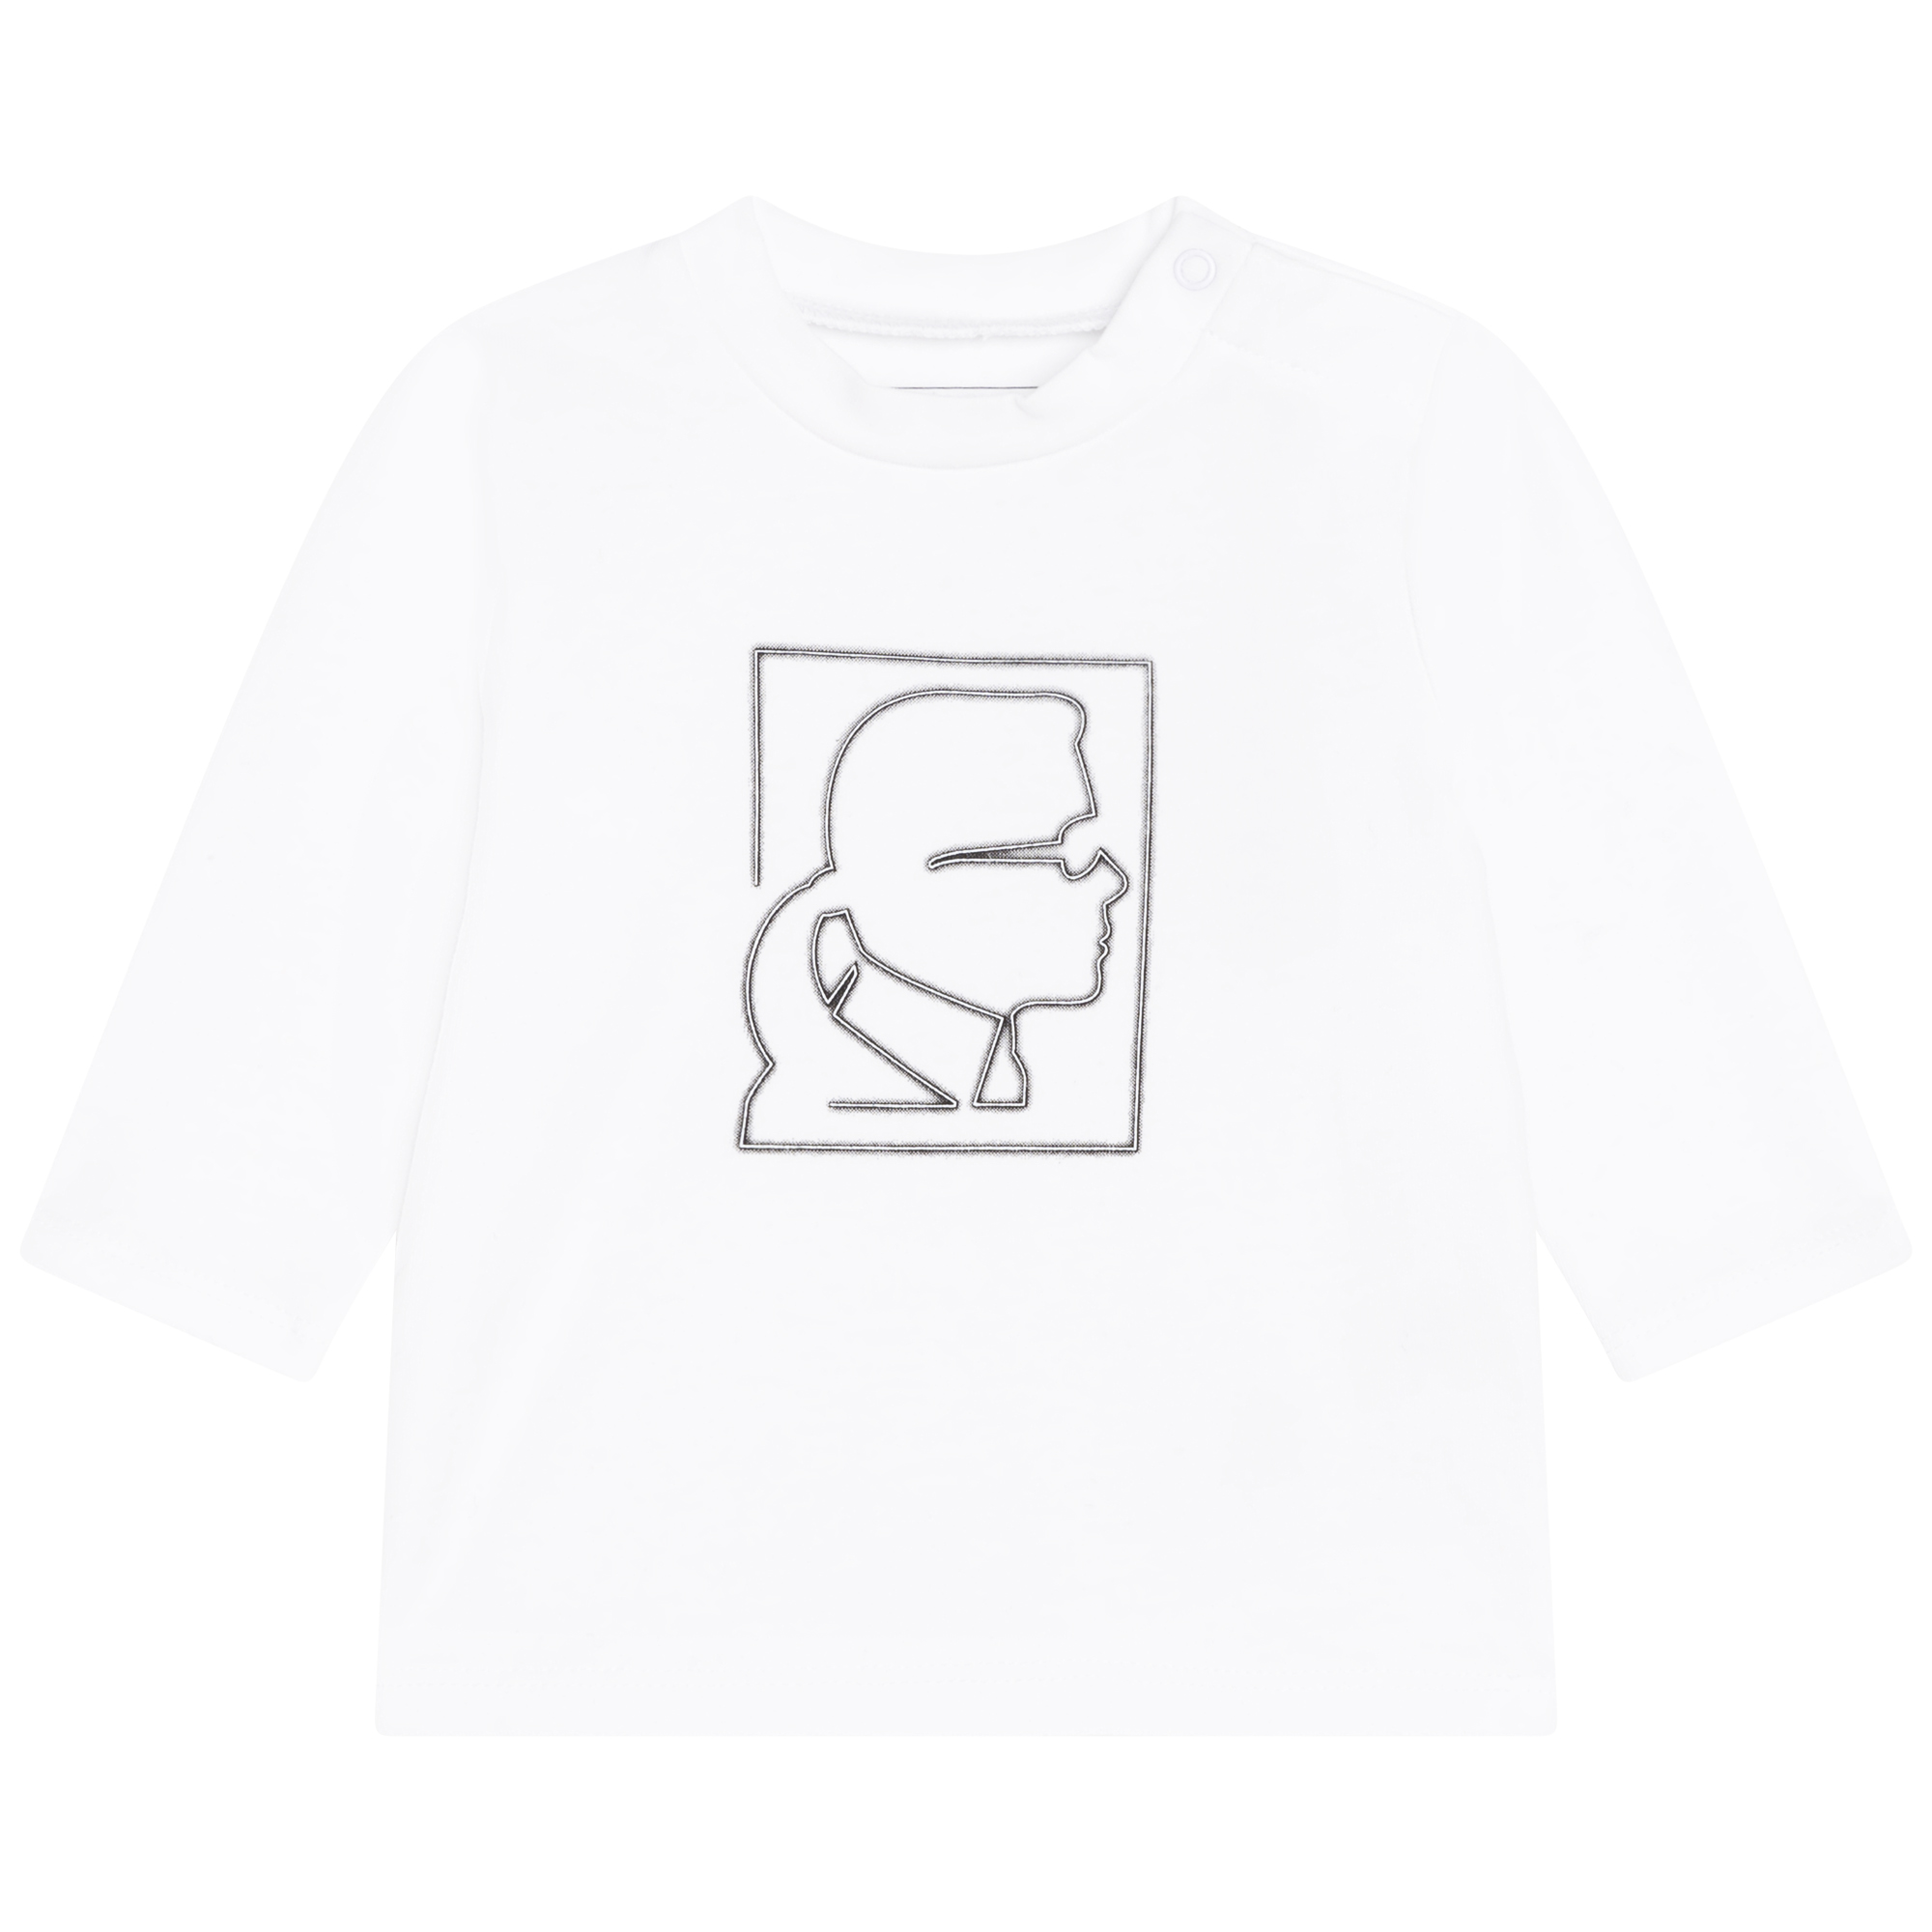 Camiseta y pantalón de chándal KARL LARGERFELD KIDS para NIÑO